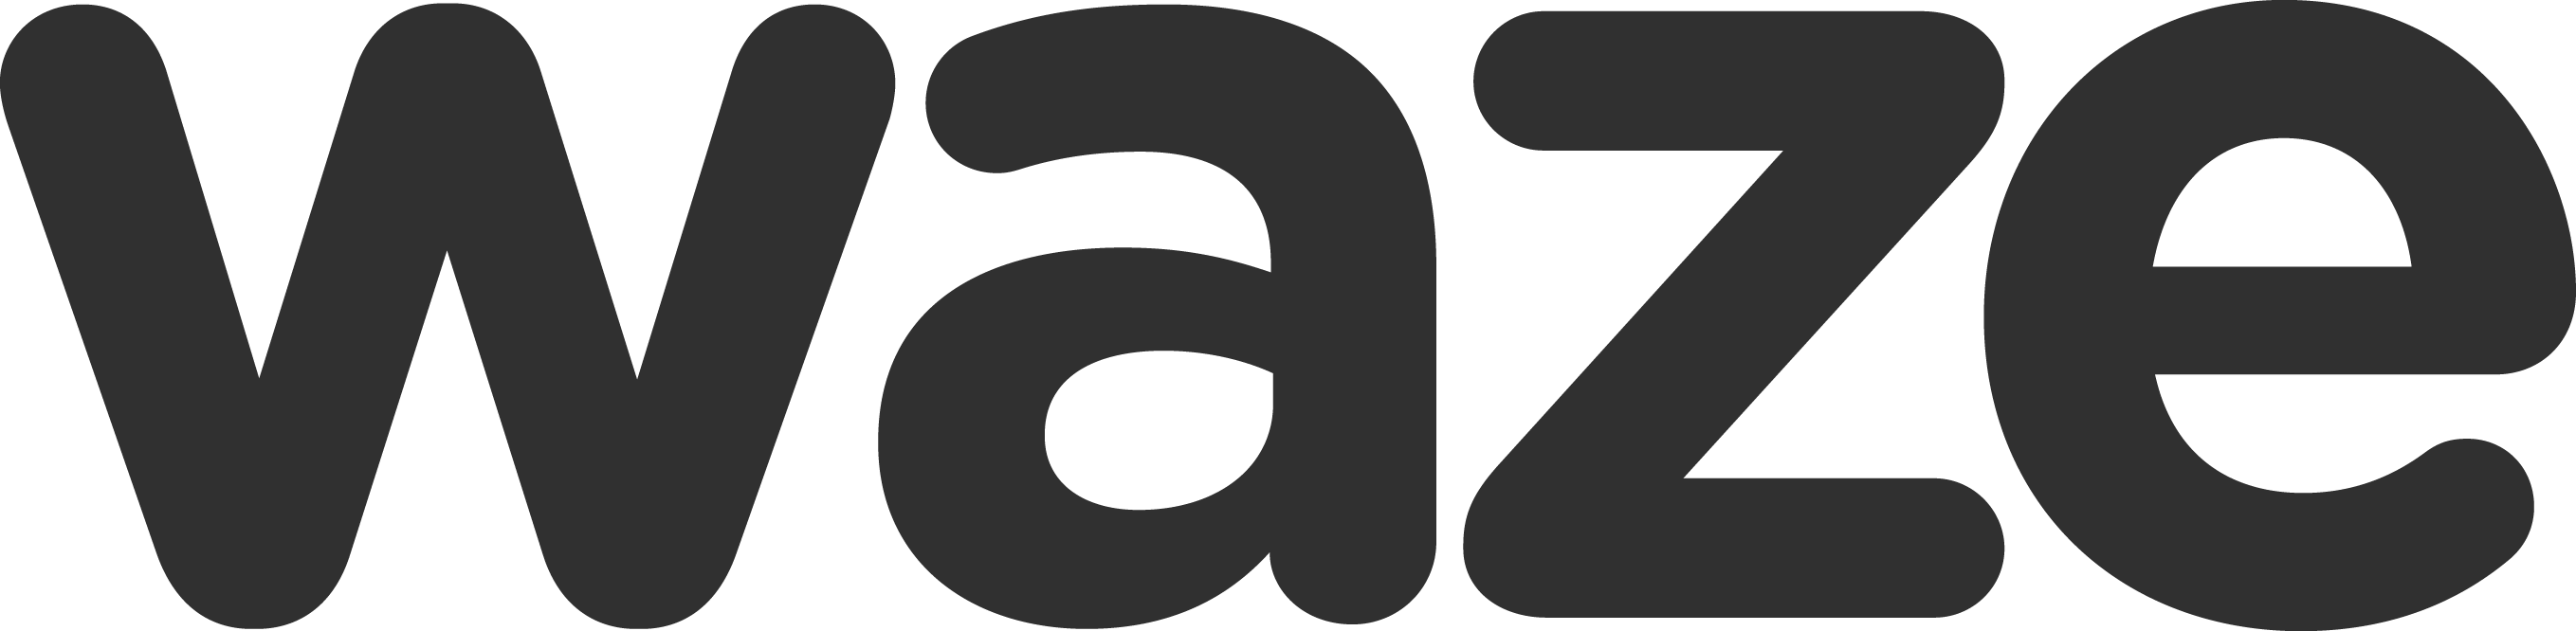 Waze Logo - Waze PNG image free download